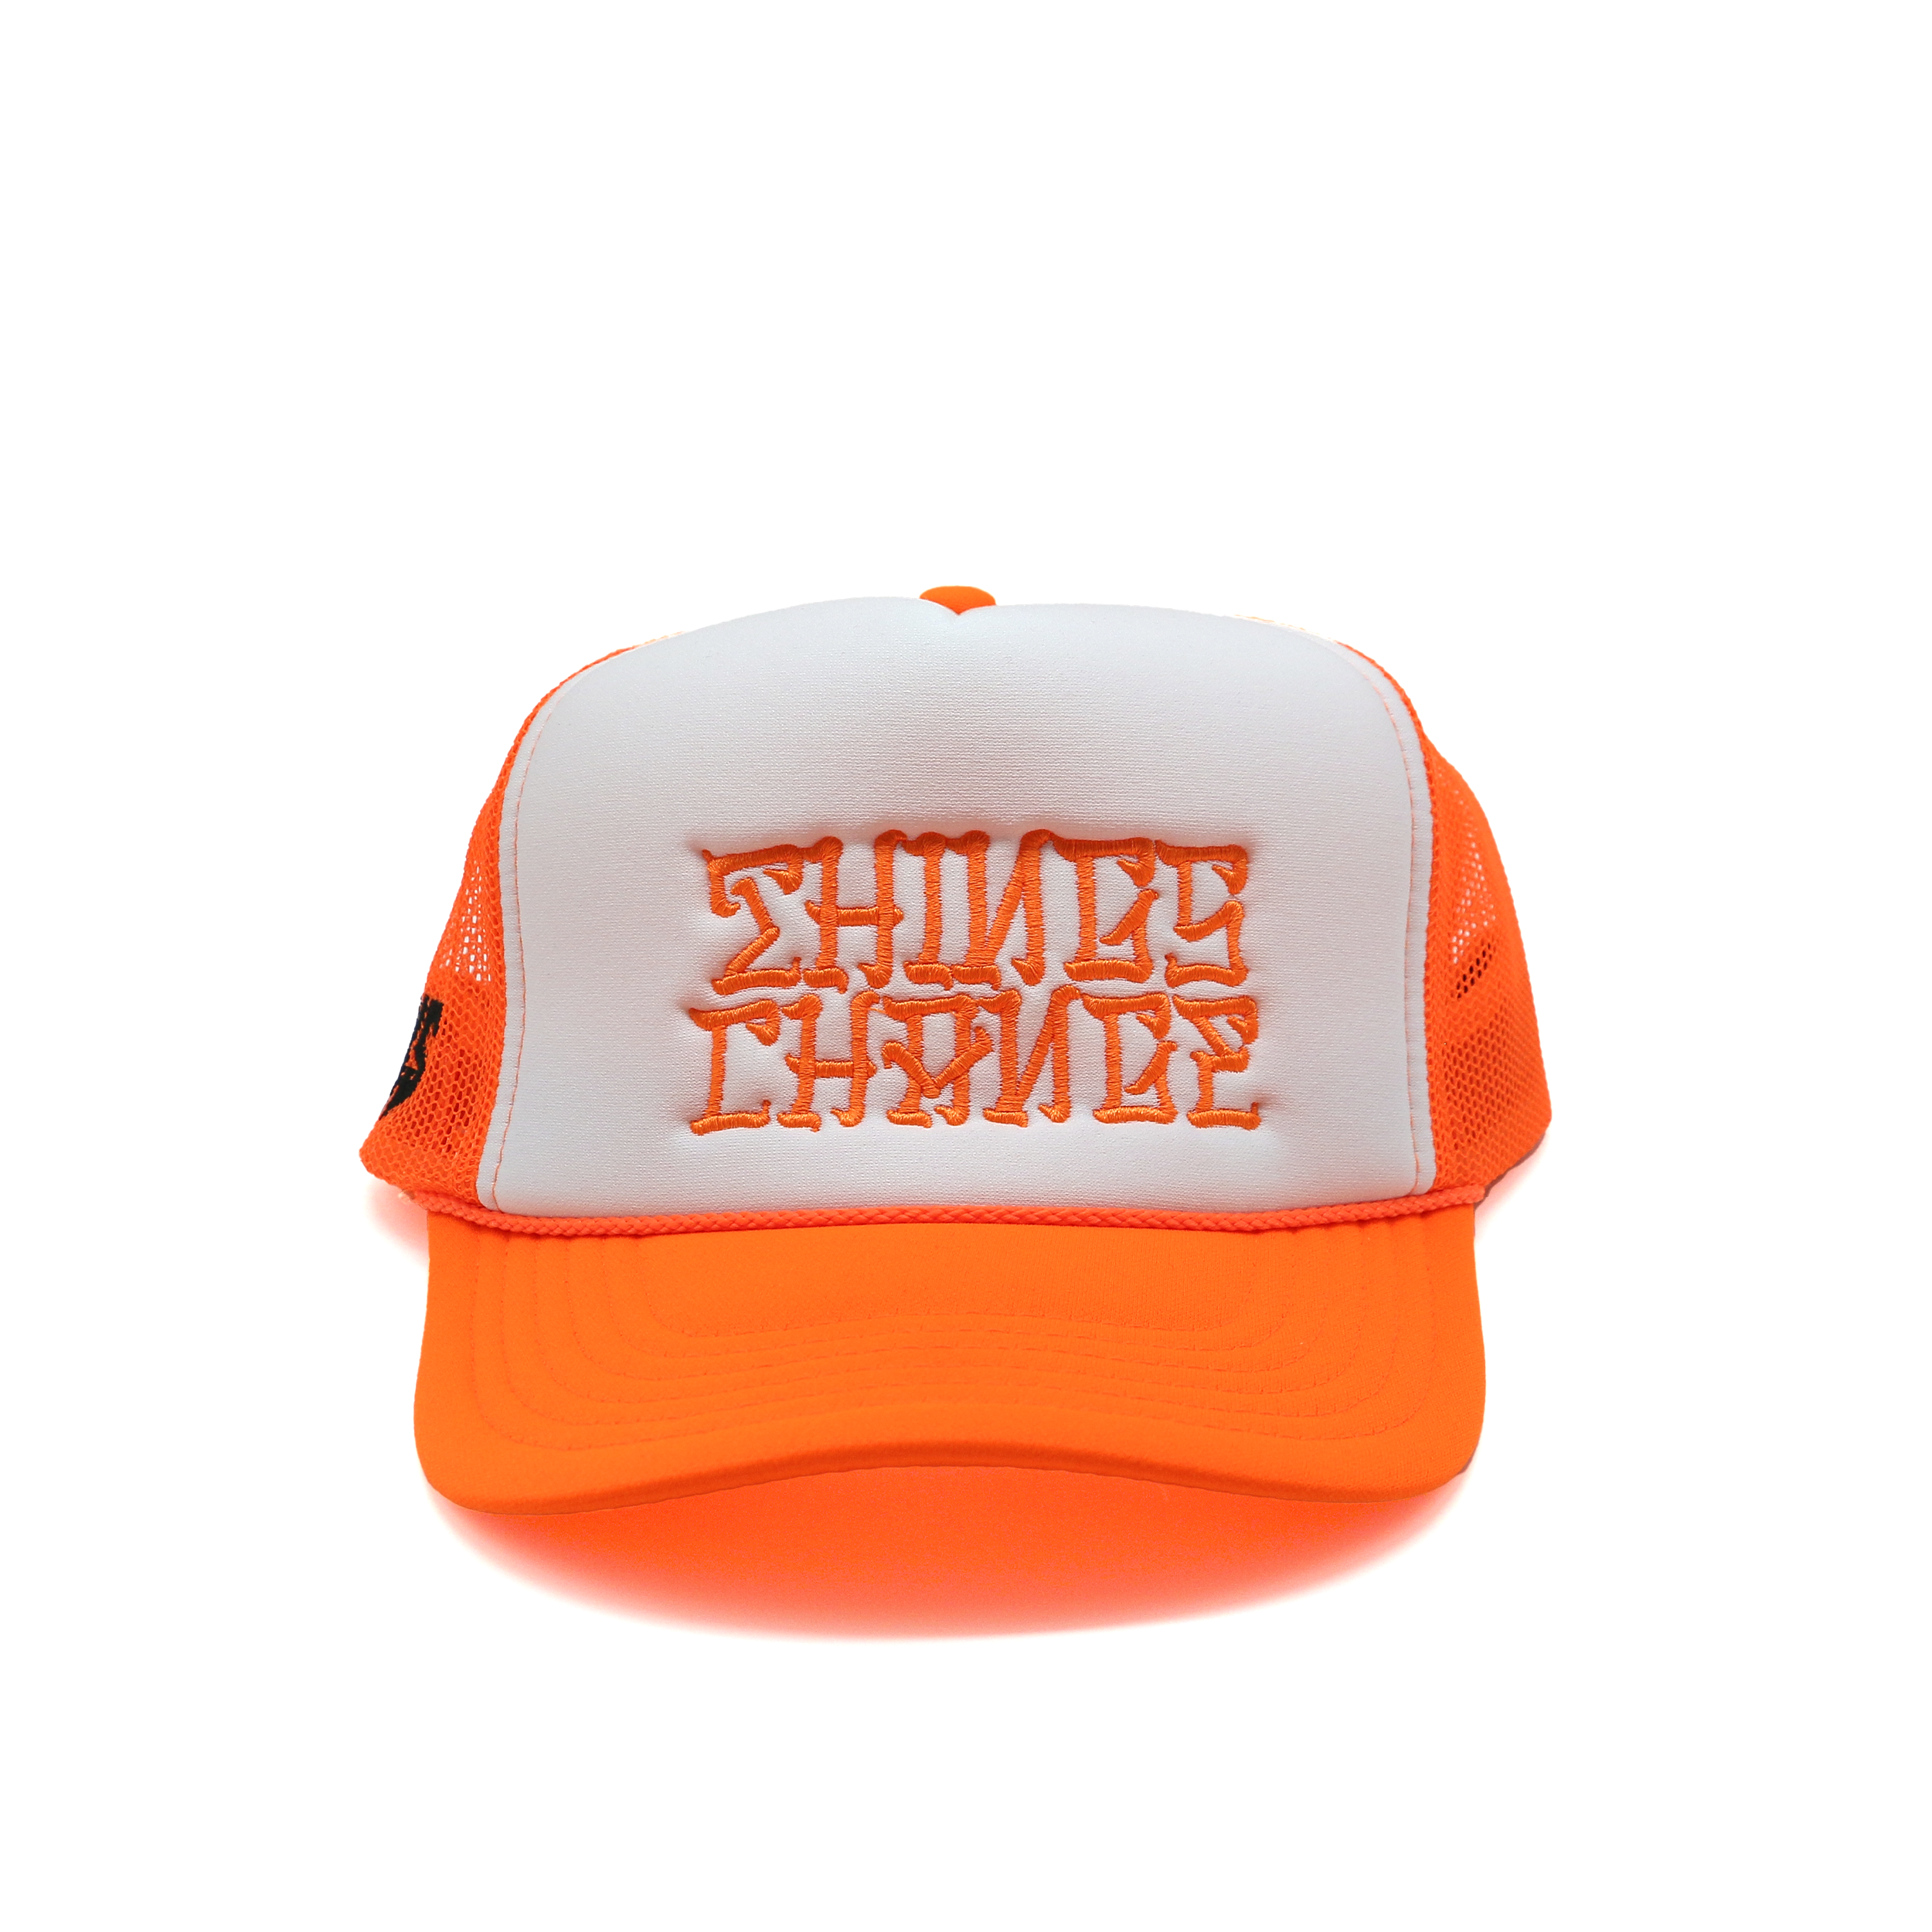 DKS "Things Change" Trucker Hat (Orange/White/Orange)